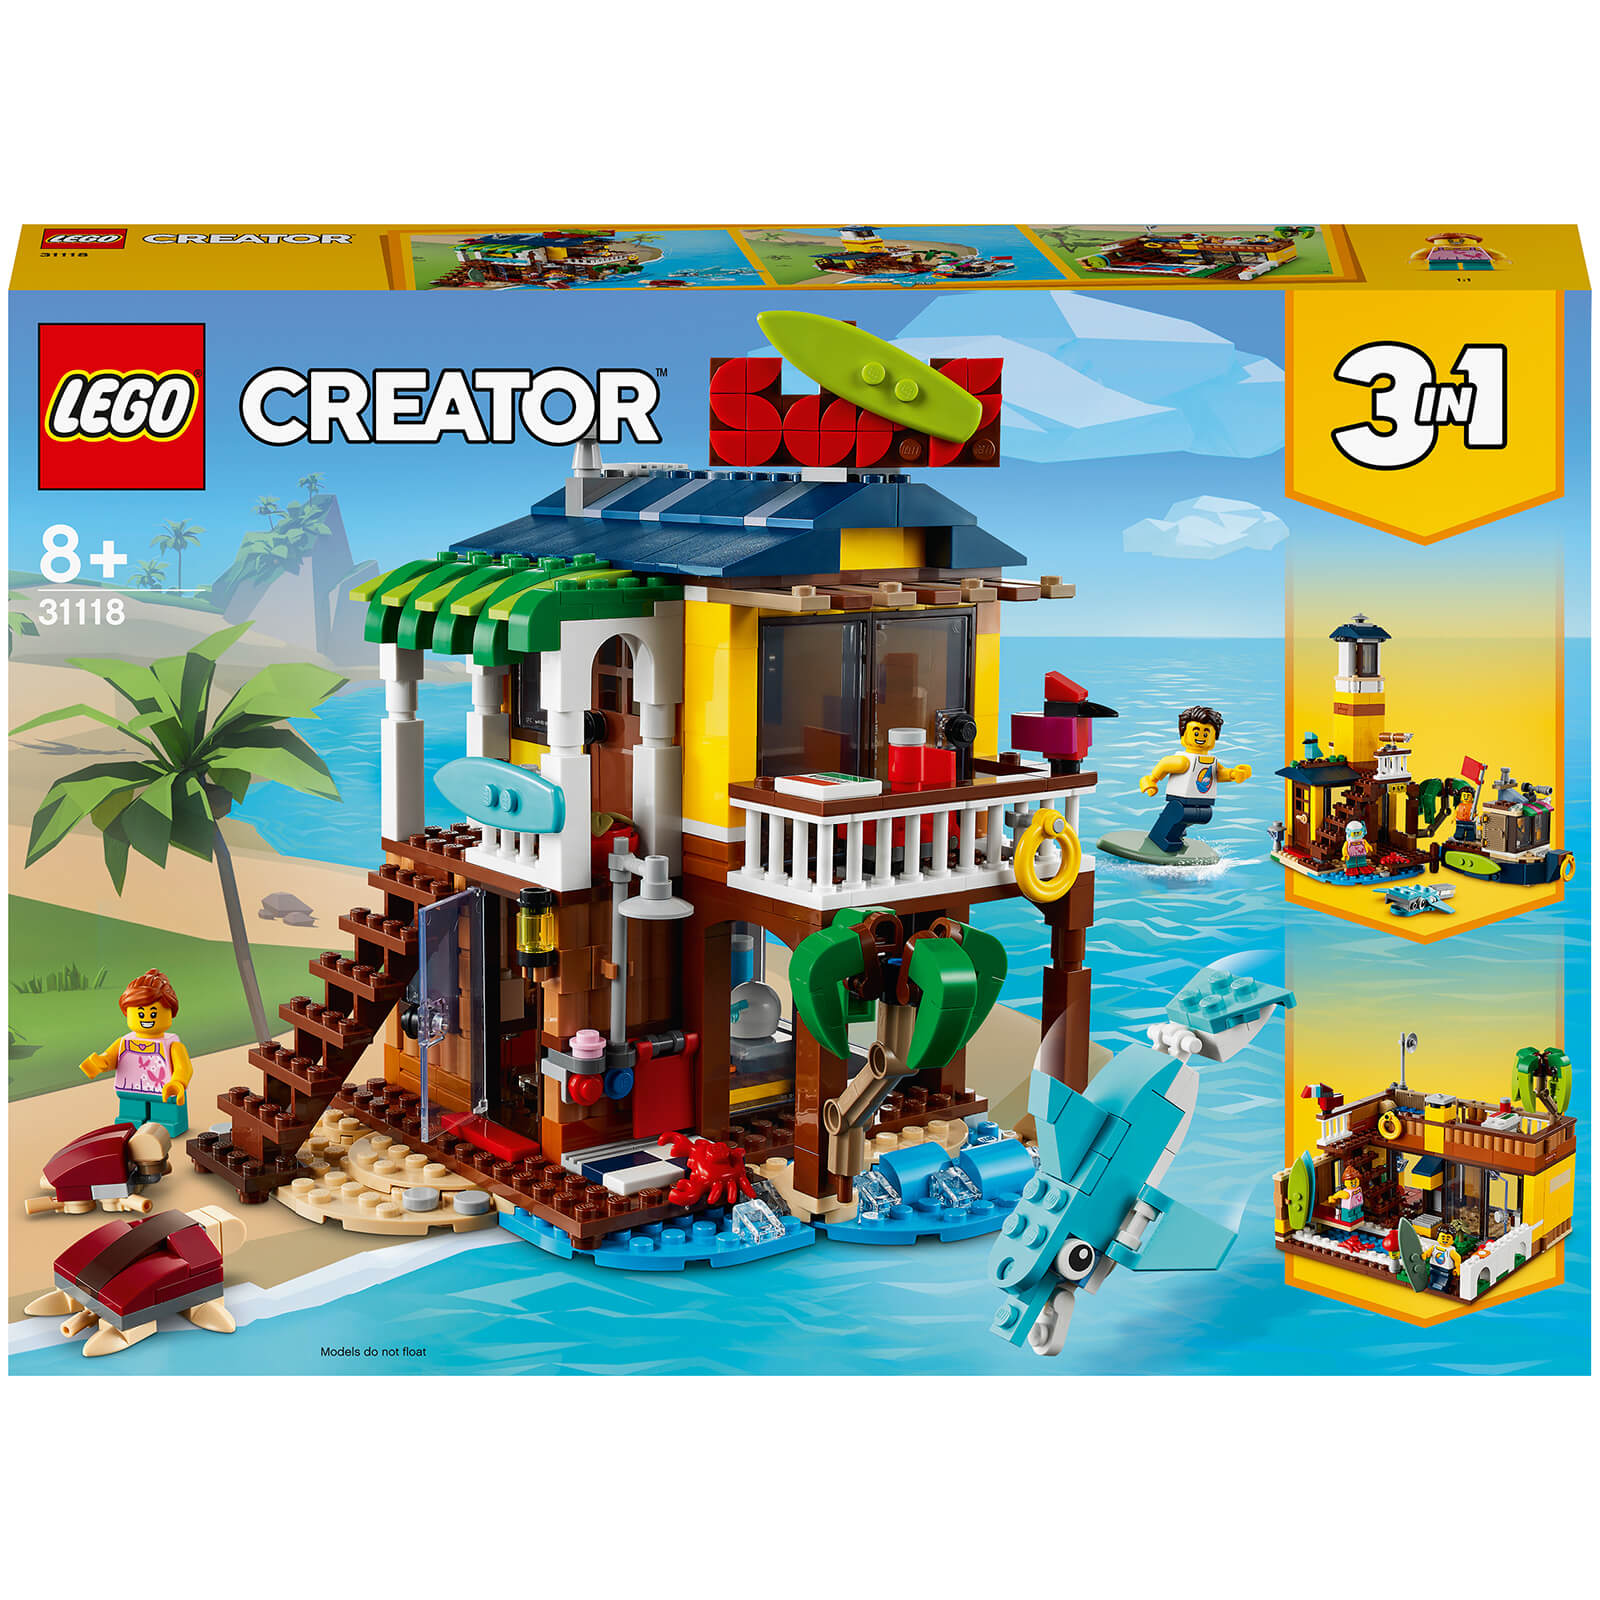 LEGO Creator: 3 in 1 Surfer Beach House Building Set (31118)